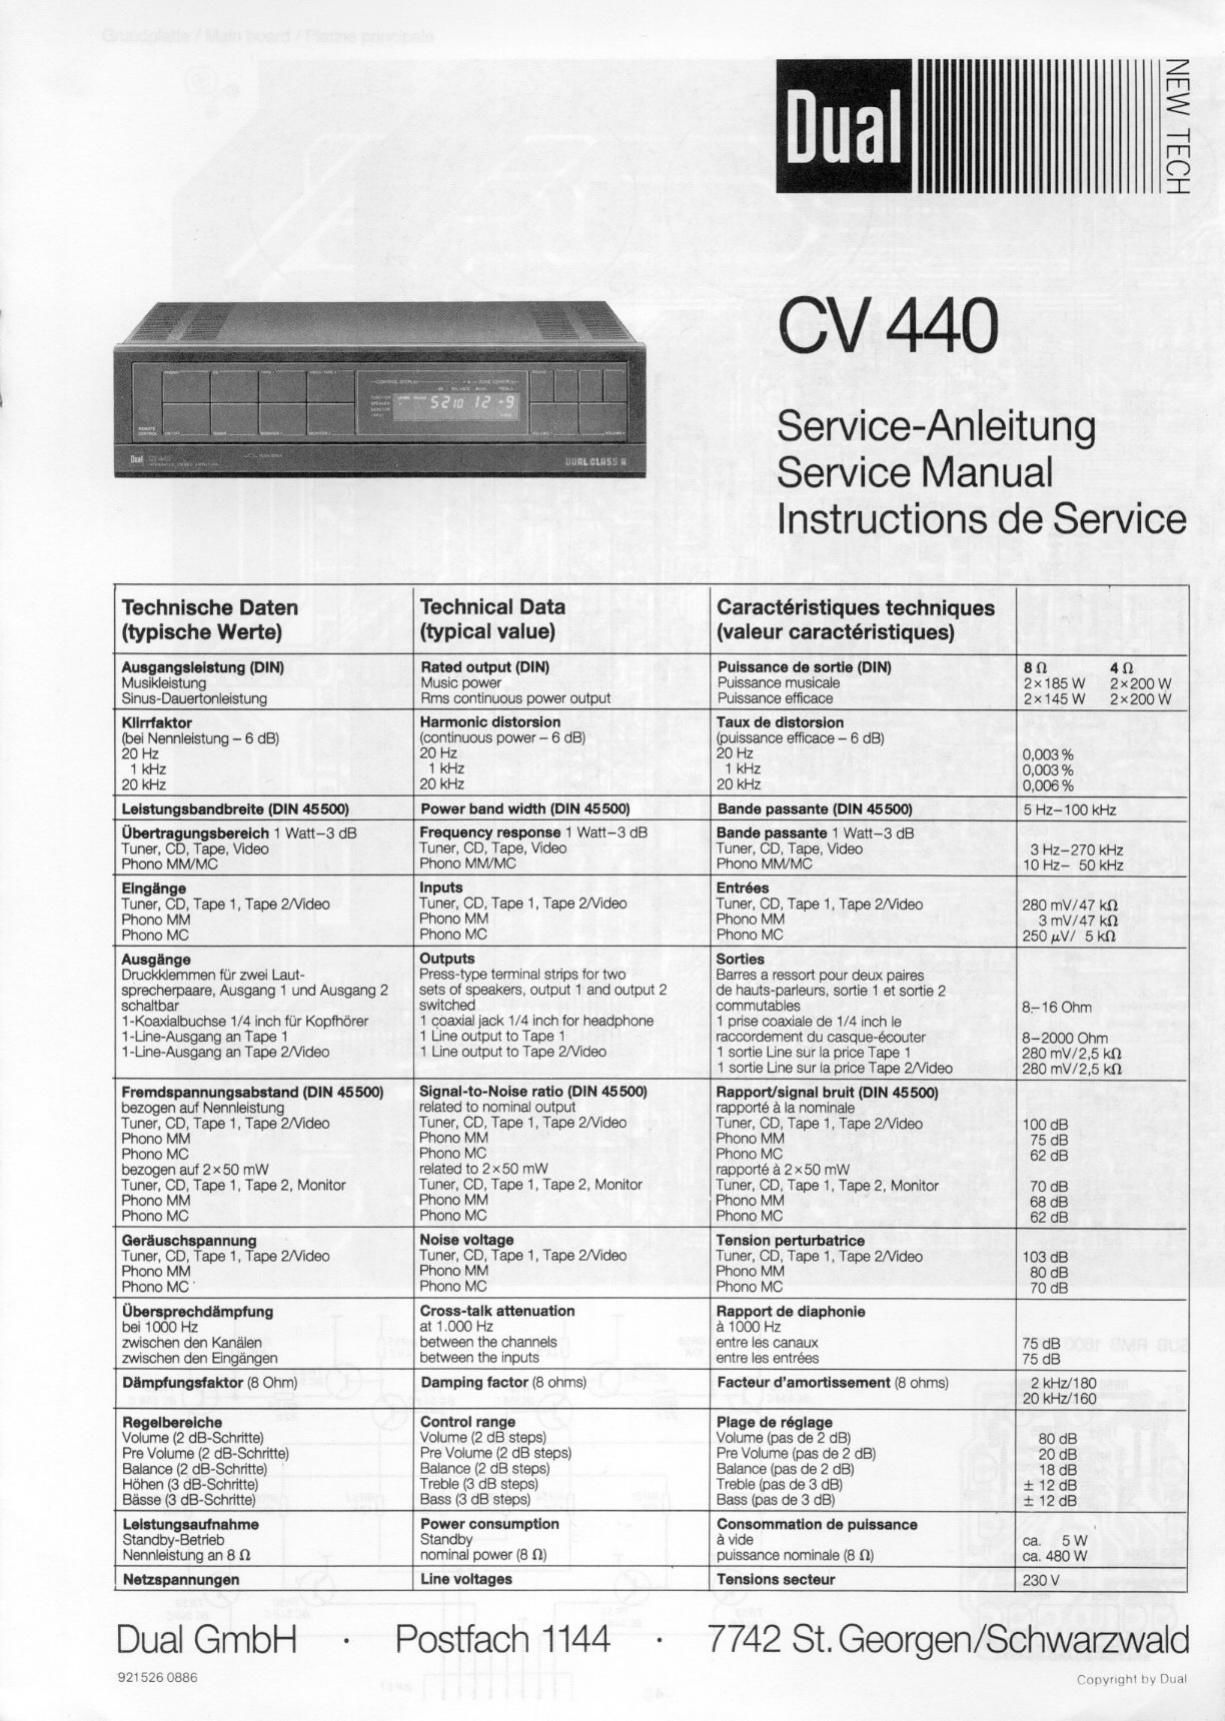 Dual CV 440 Service Manual